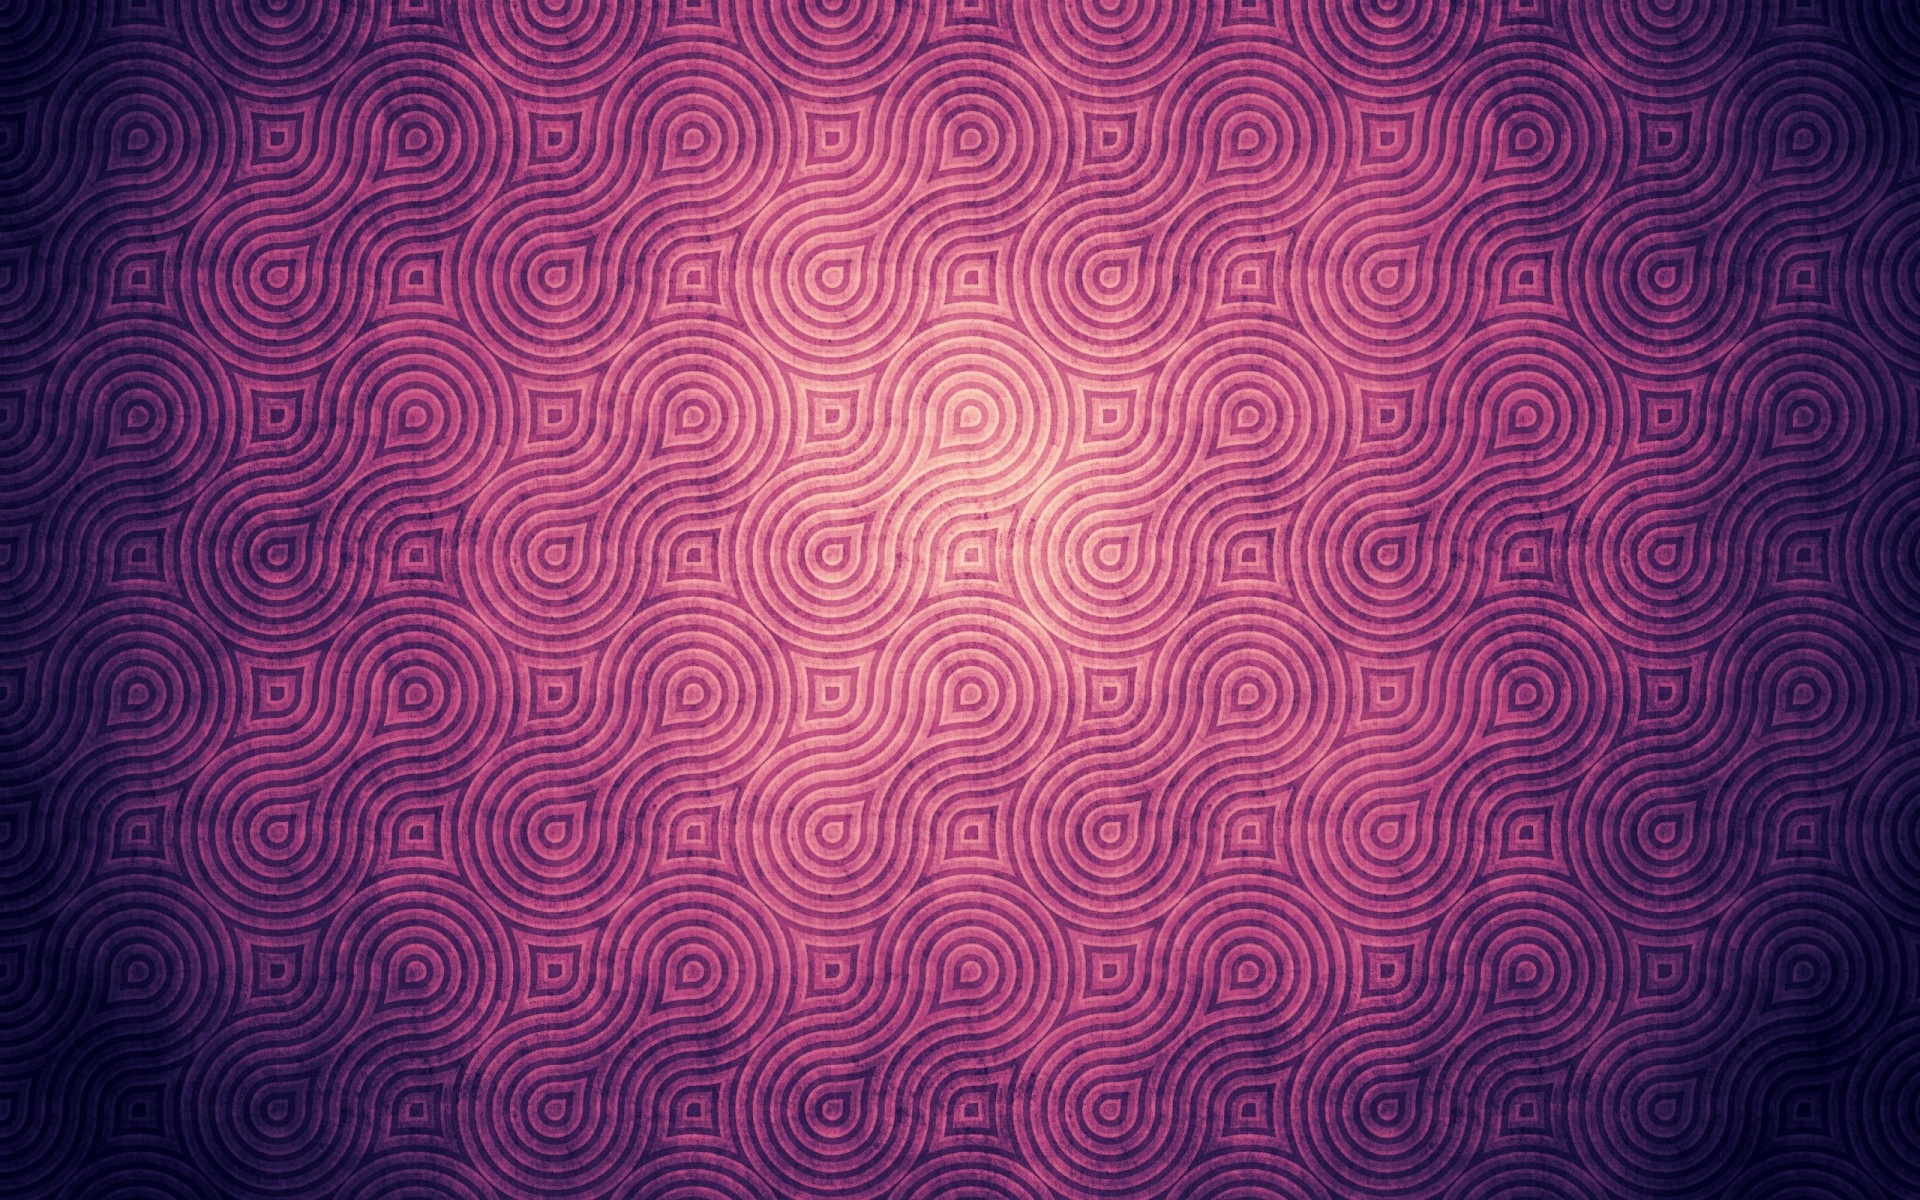 Plain Wallpapers HD purple design